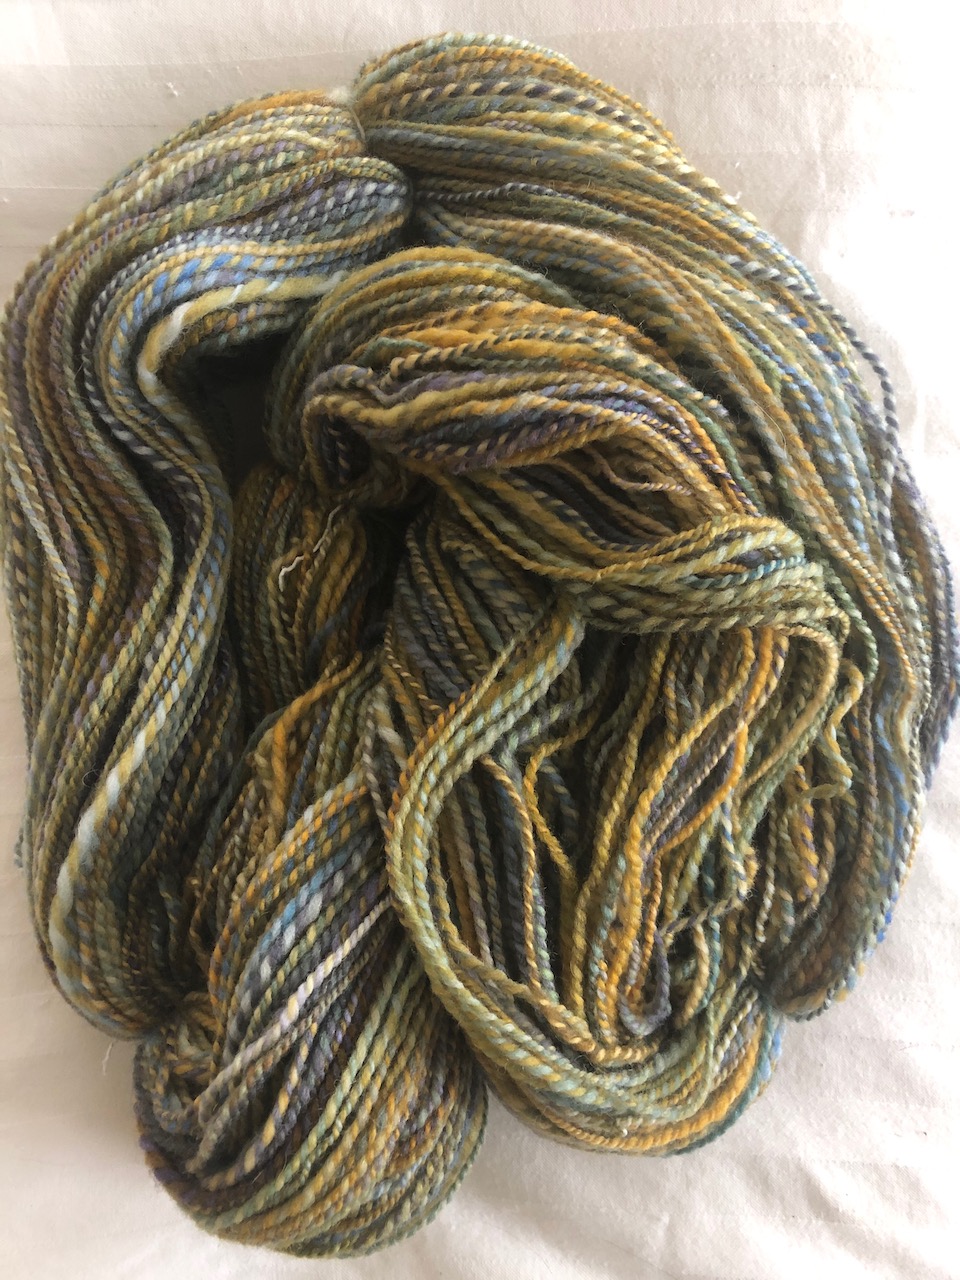 Spun yarn (Merino and/or Columbia, hand-dyed)